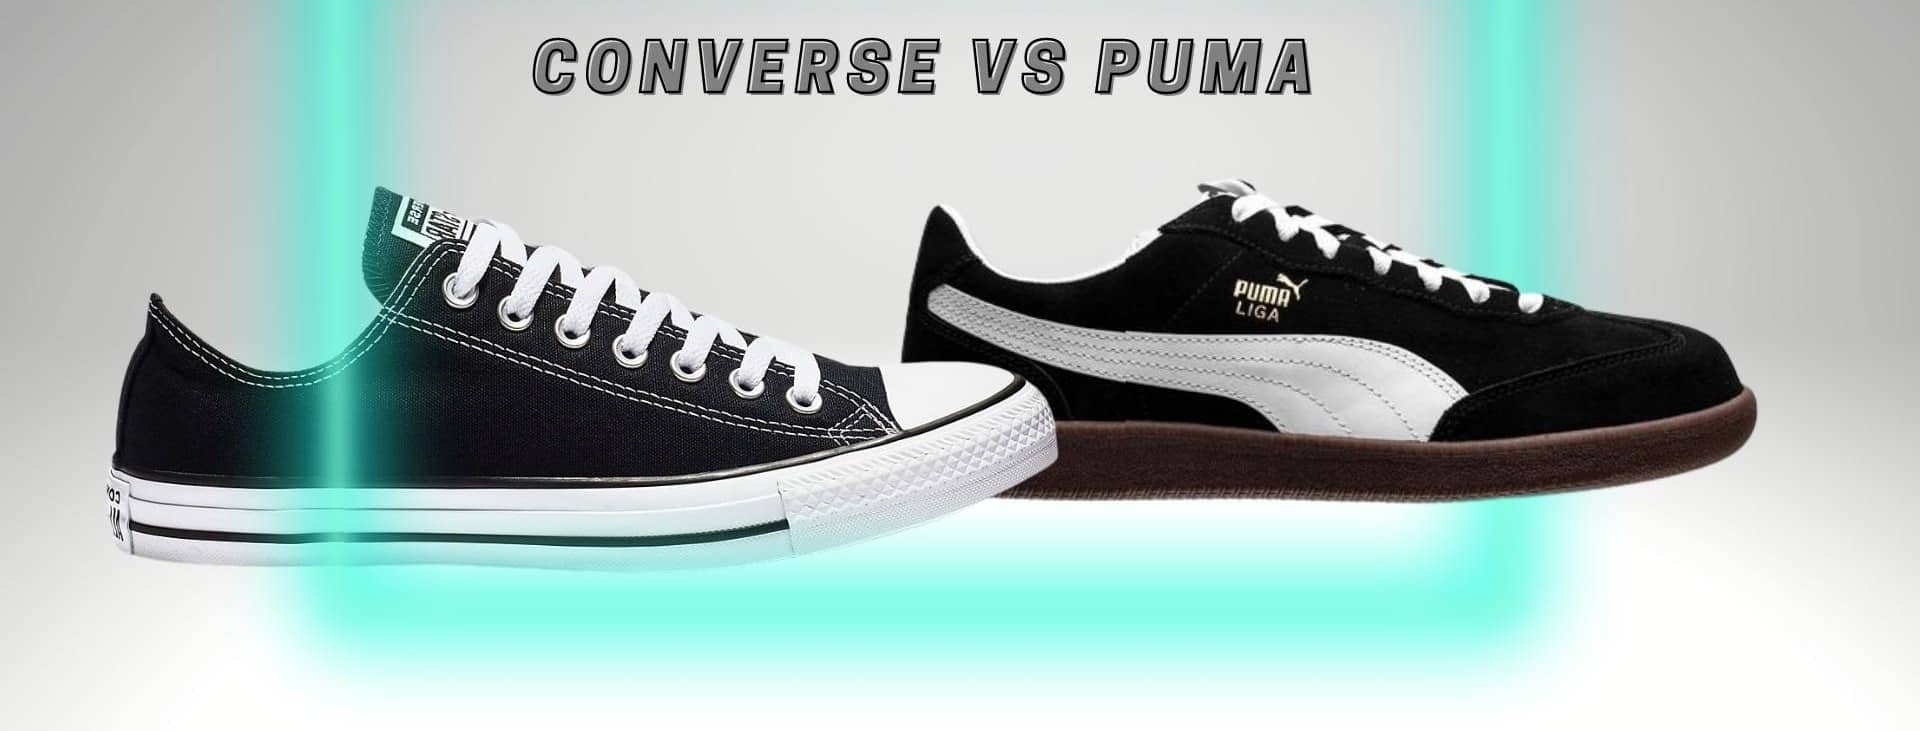 Converse vs Puma